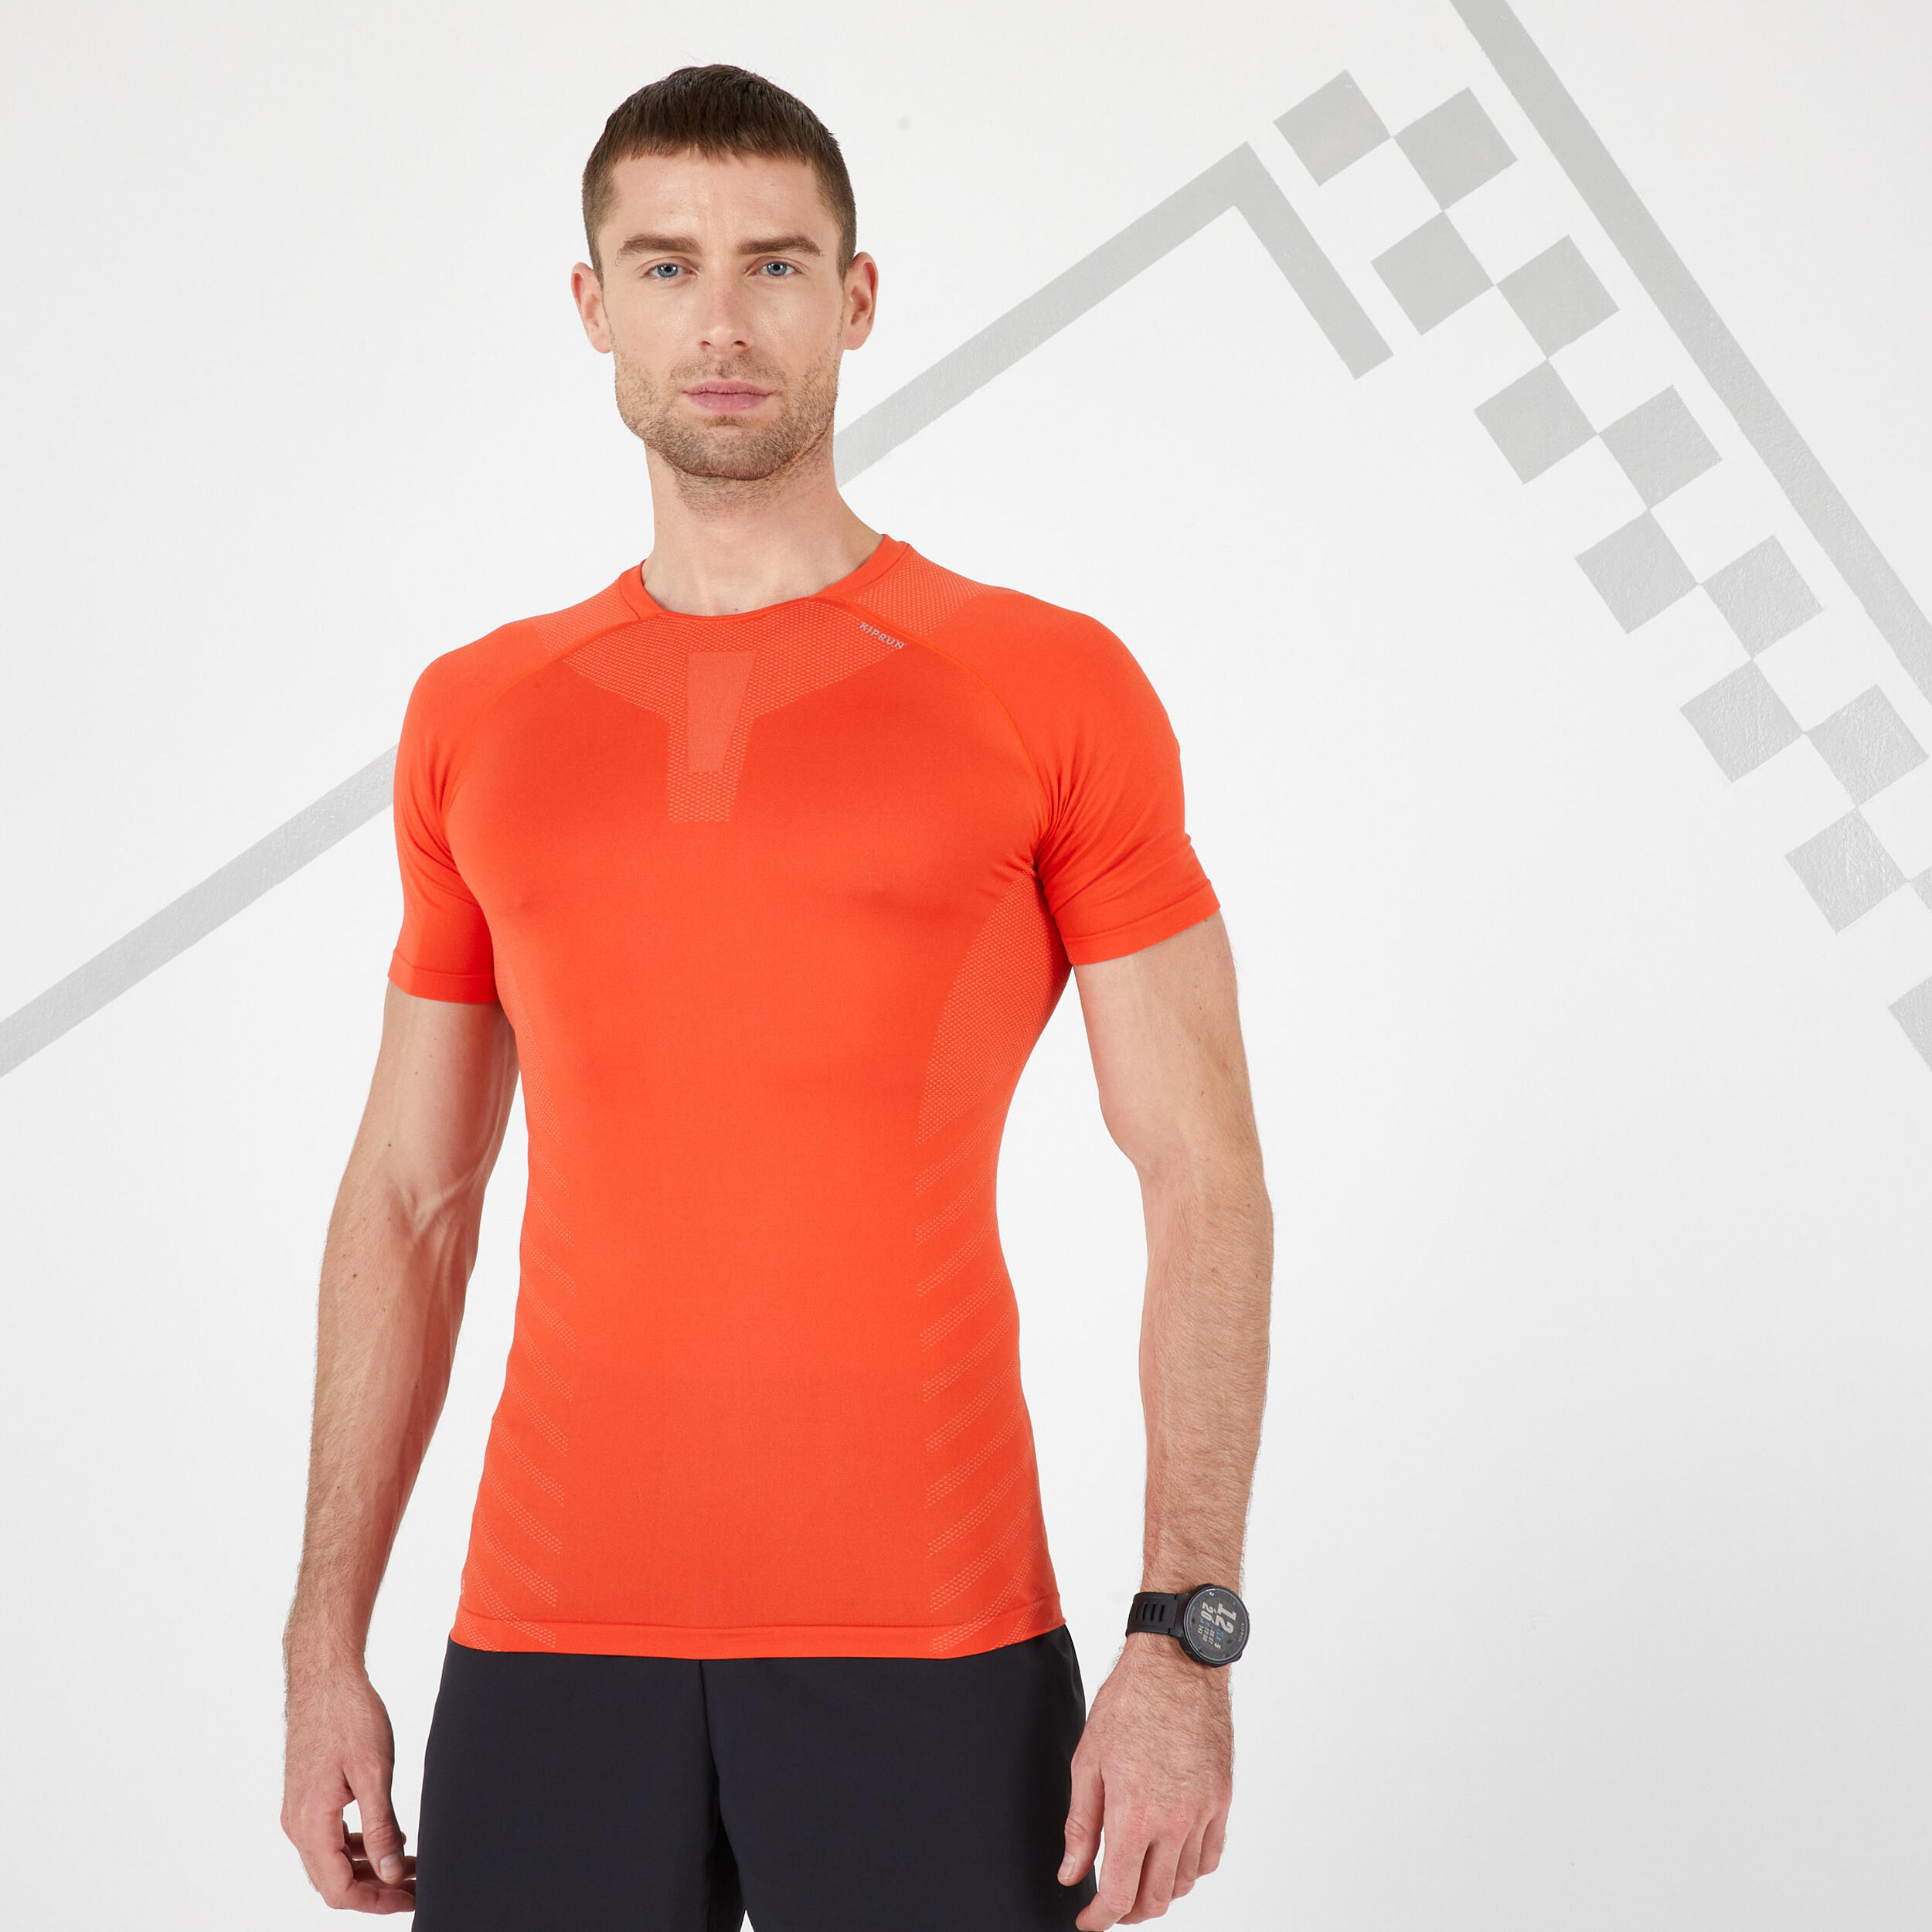 Alpha Hommes Gym T-shirt musculaire Fitness Bodybuilding Outdoor Jogging 3 Couleurs